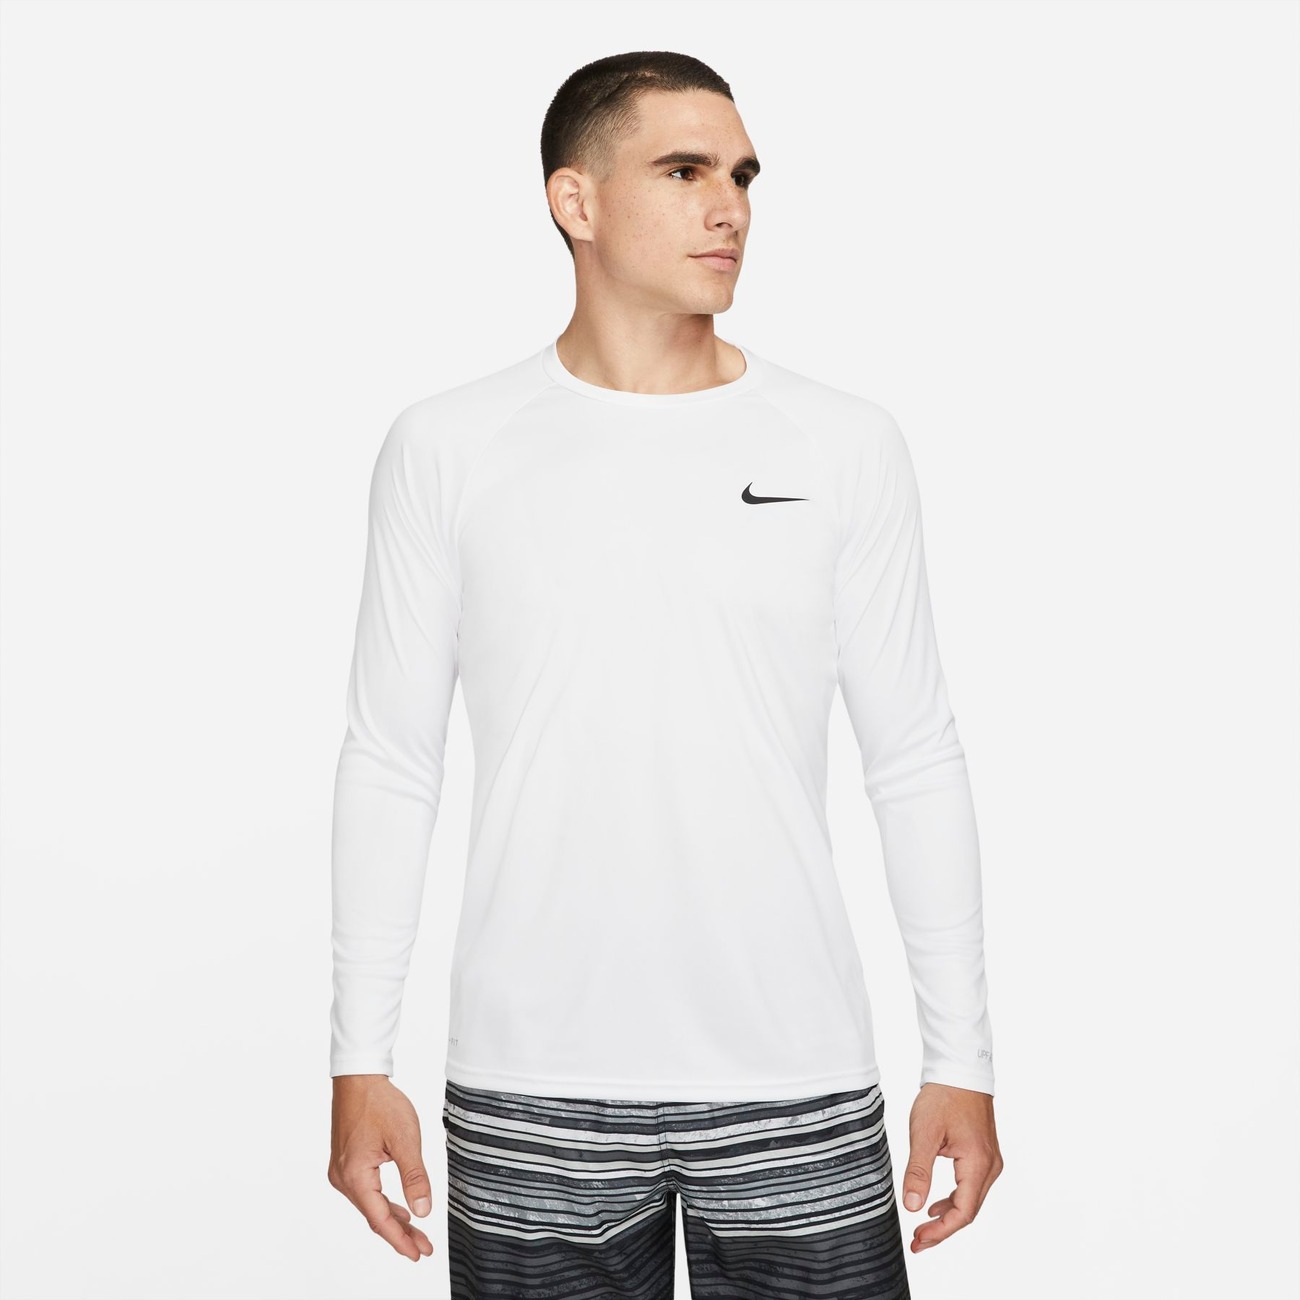 Camiseta Nike Hydroguard Essential UV Masculina - Foto 1